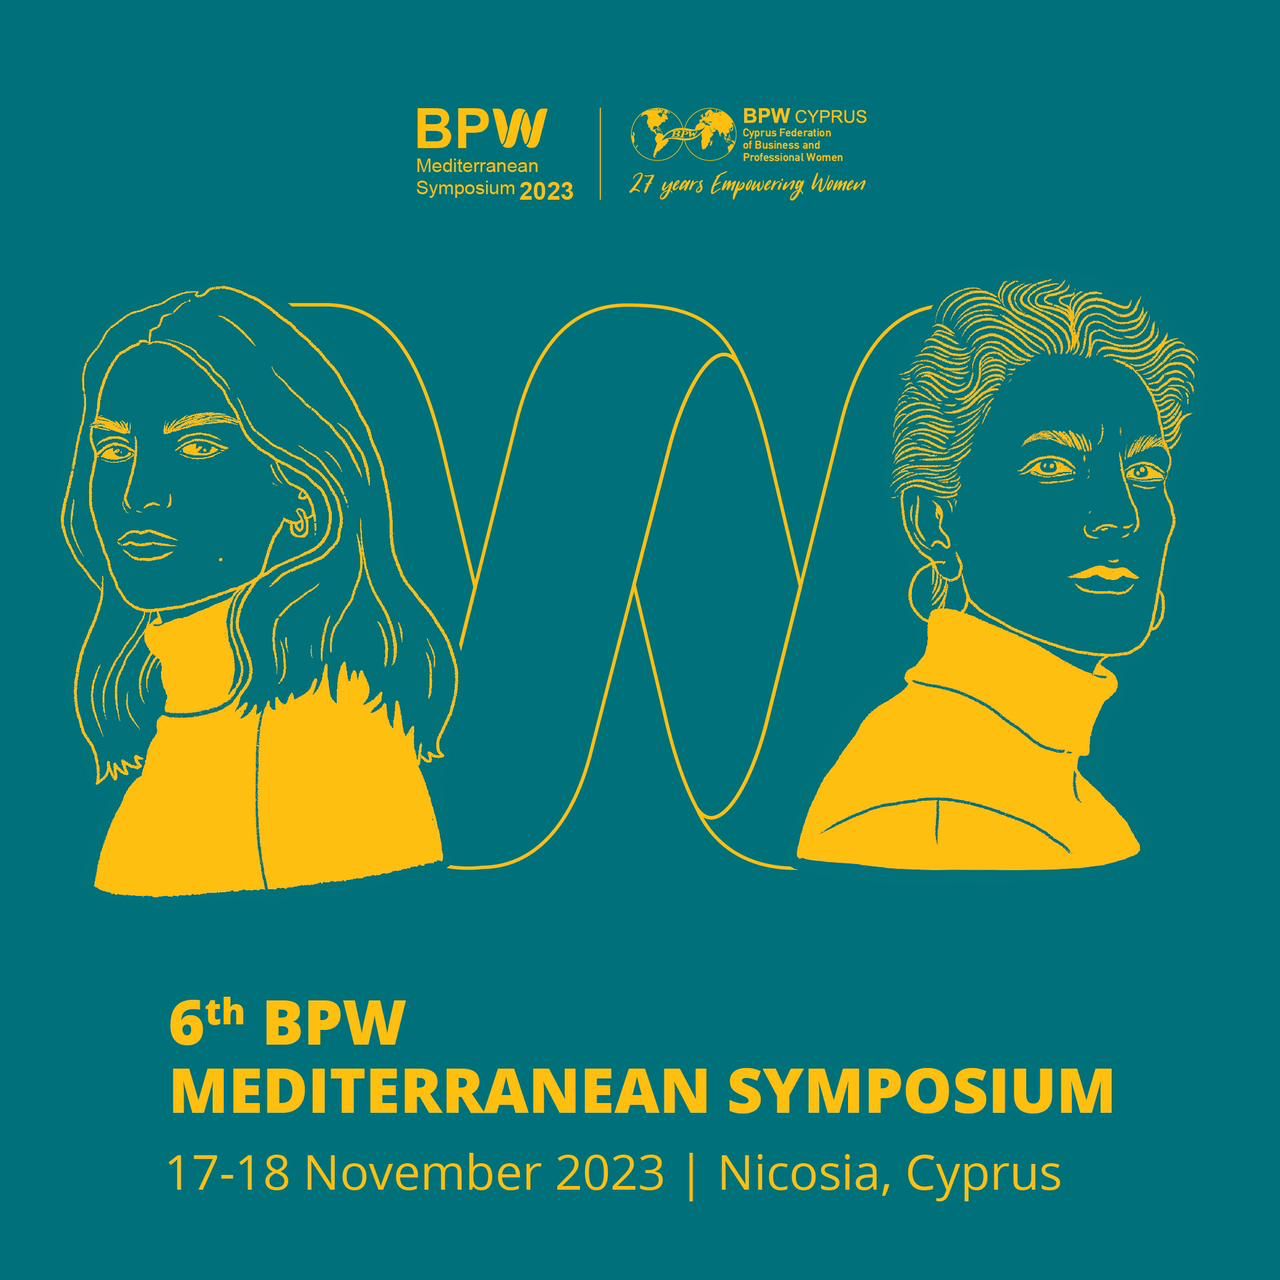 6th BPW Mediterranean Symposium in Nicosia, Cyprus - November 17-18, 2023 - Save the Date!